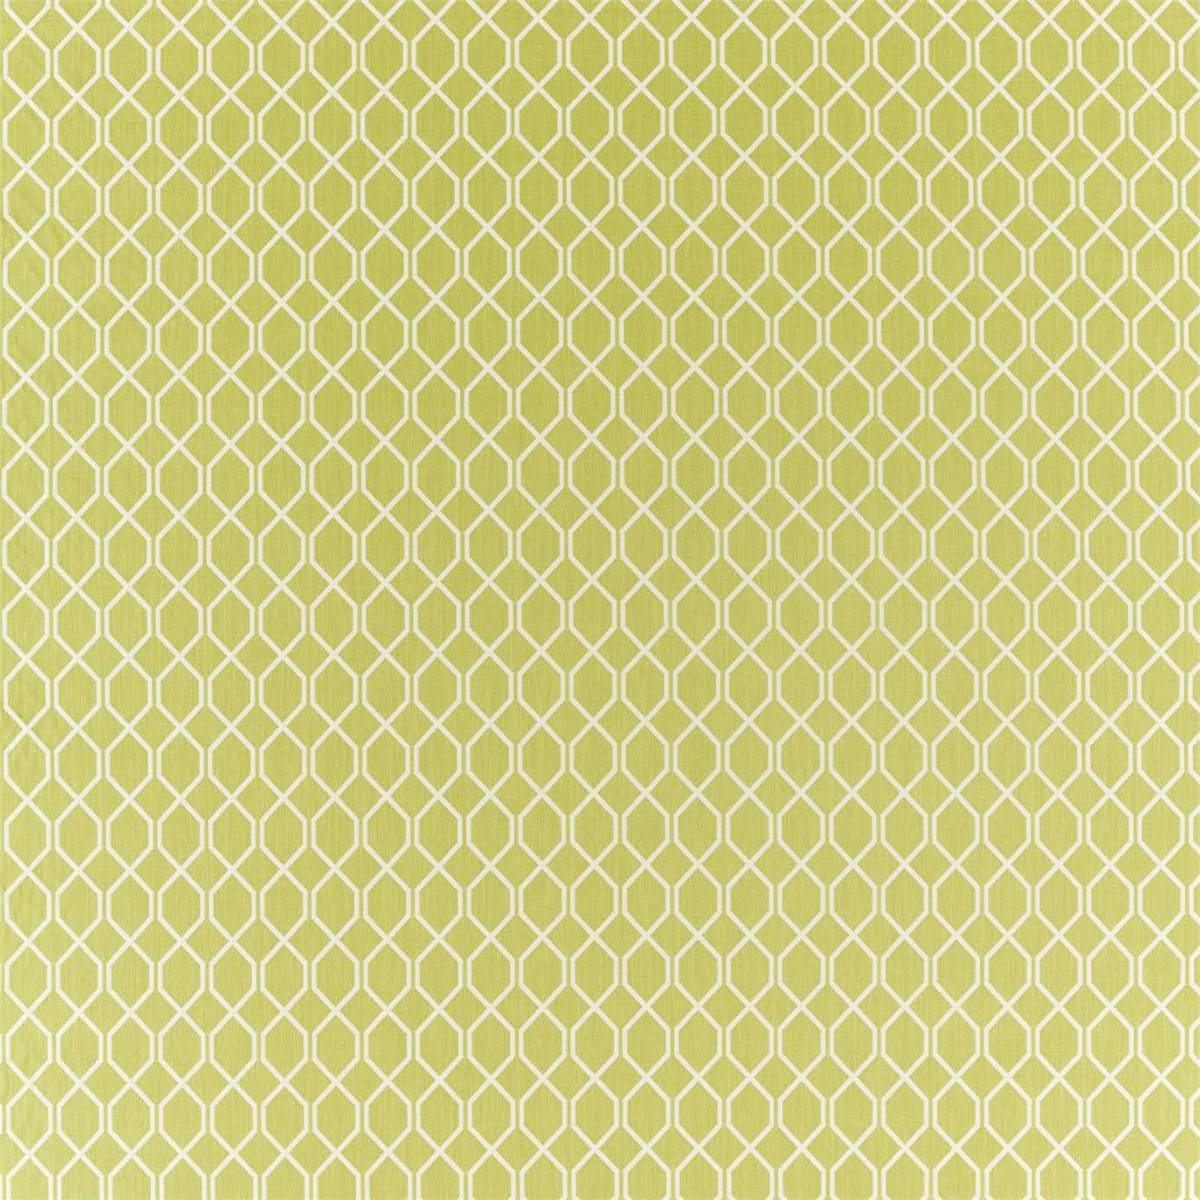 Botanic Trellis Lime Fabric by Sanderson